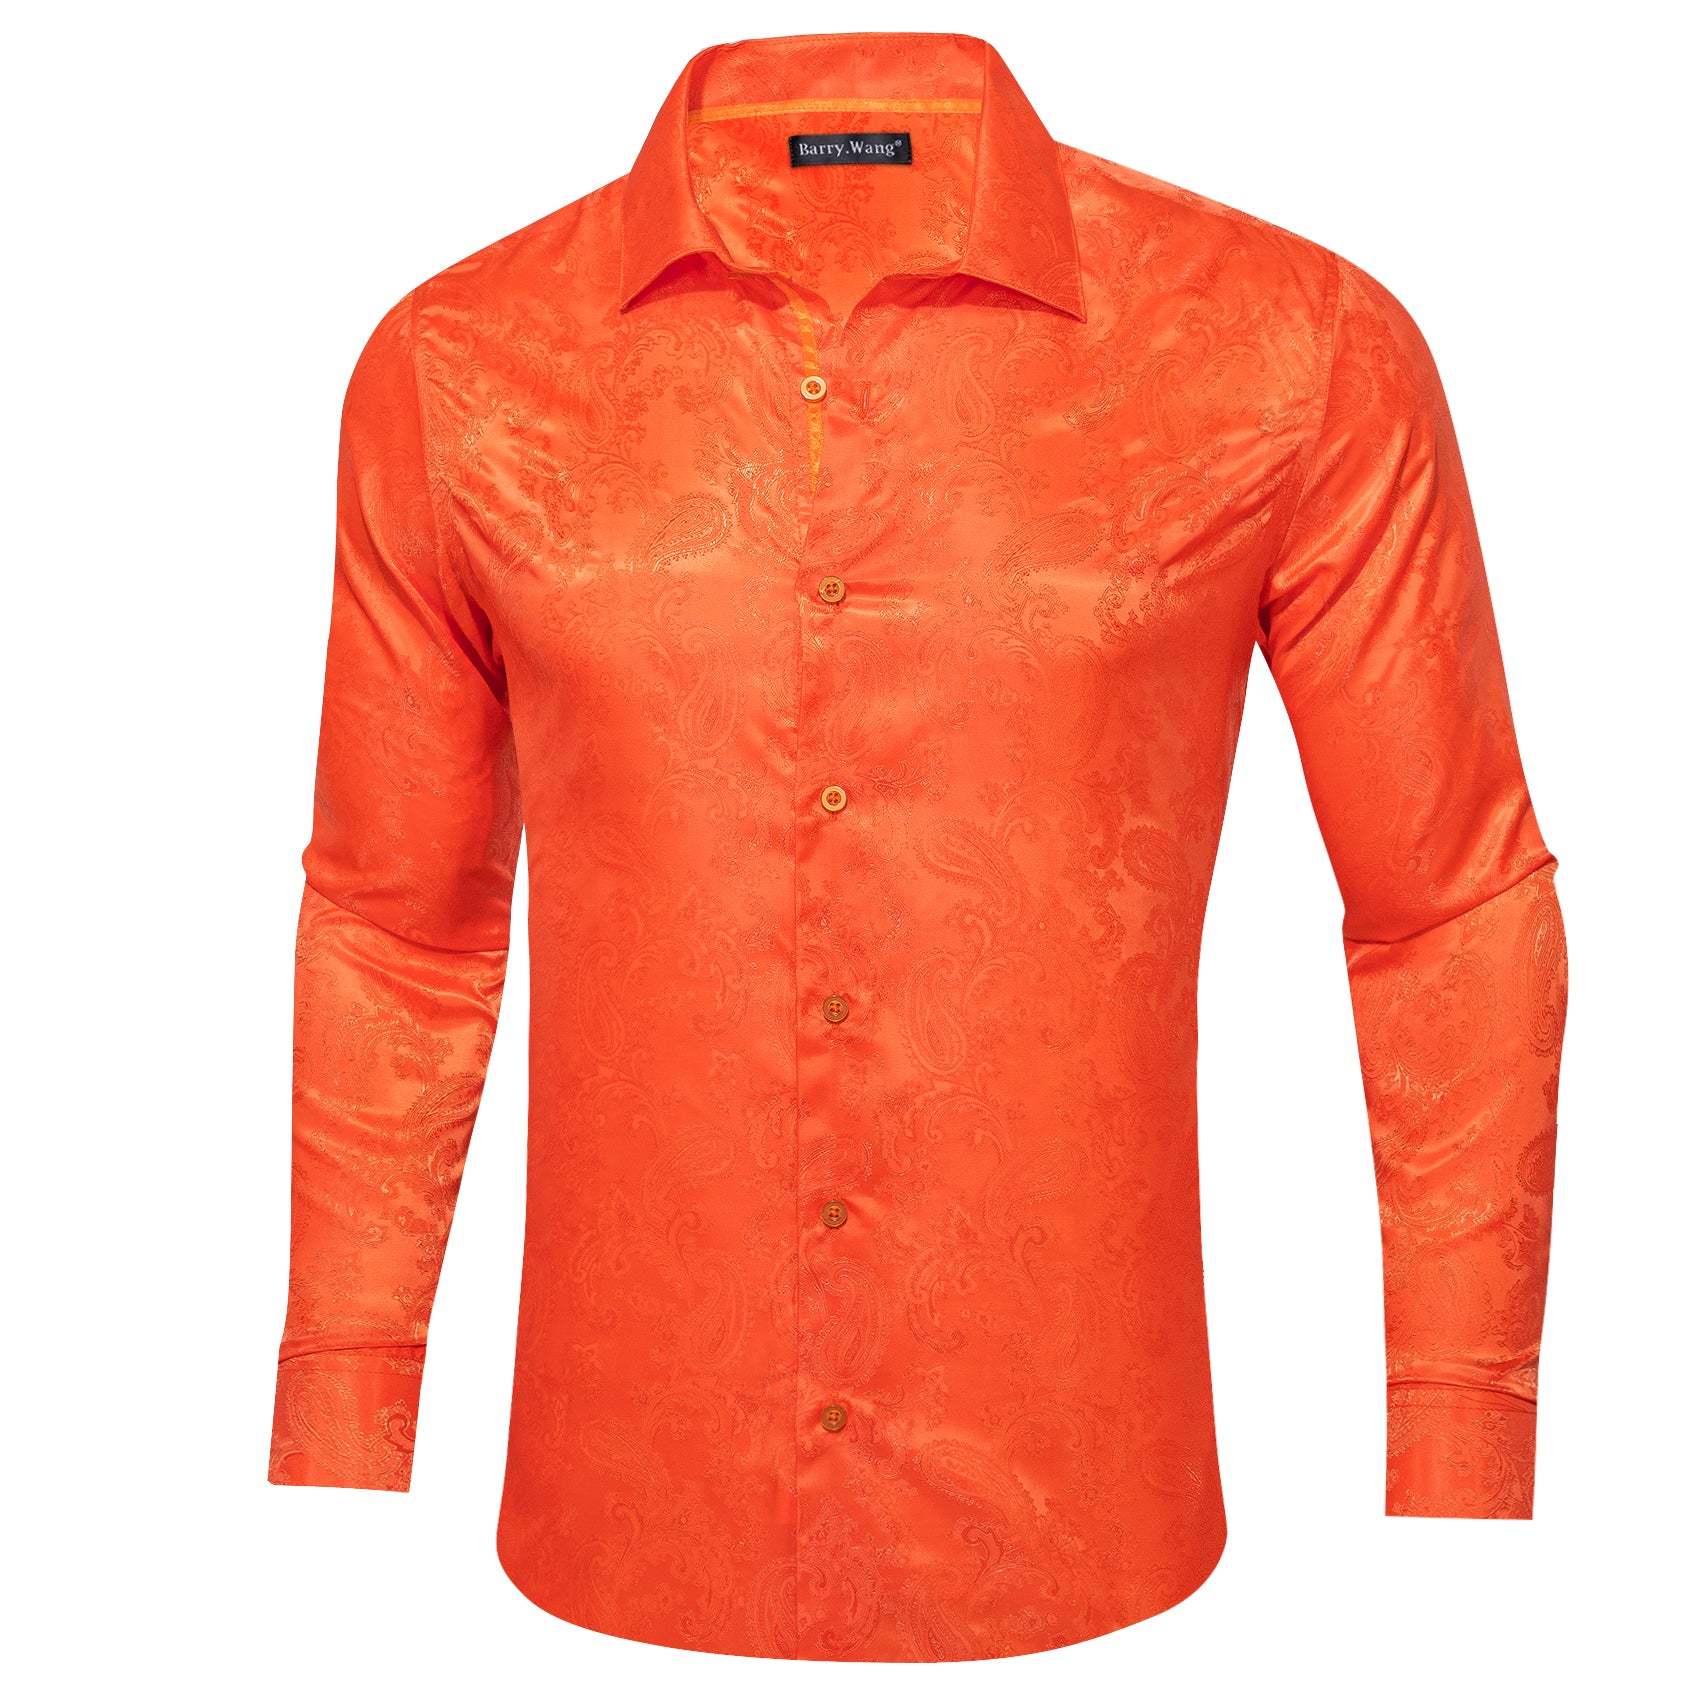 Barry.wang Orange Paisley Silk Men's Shirt